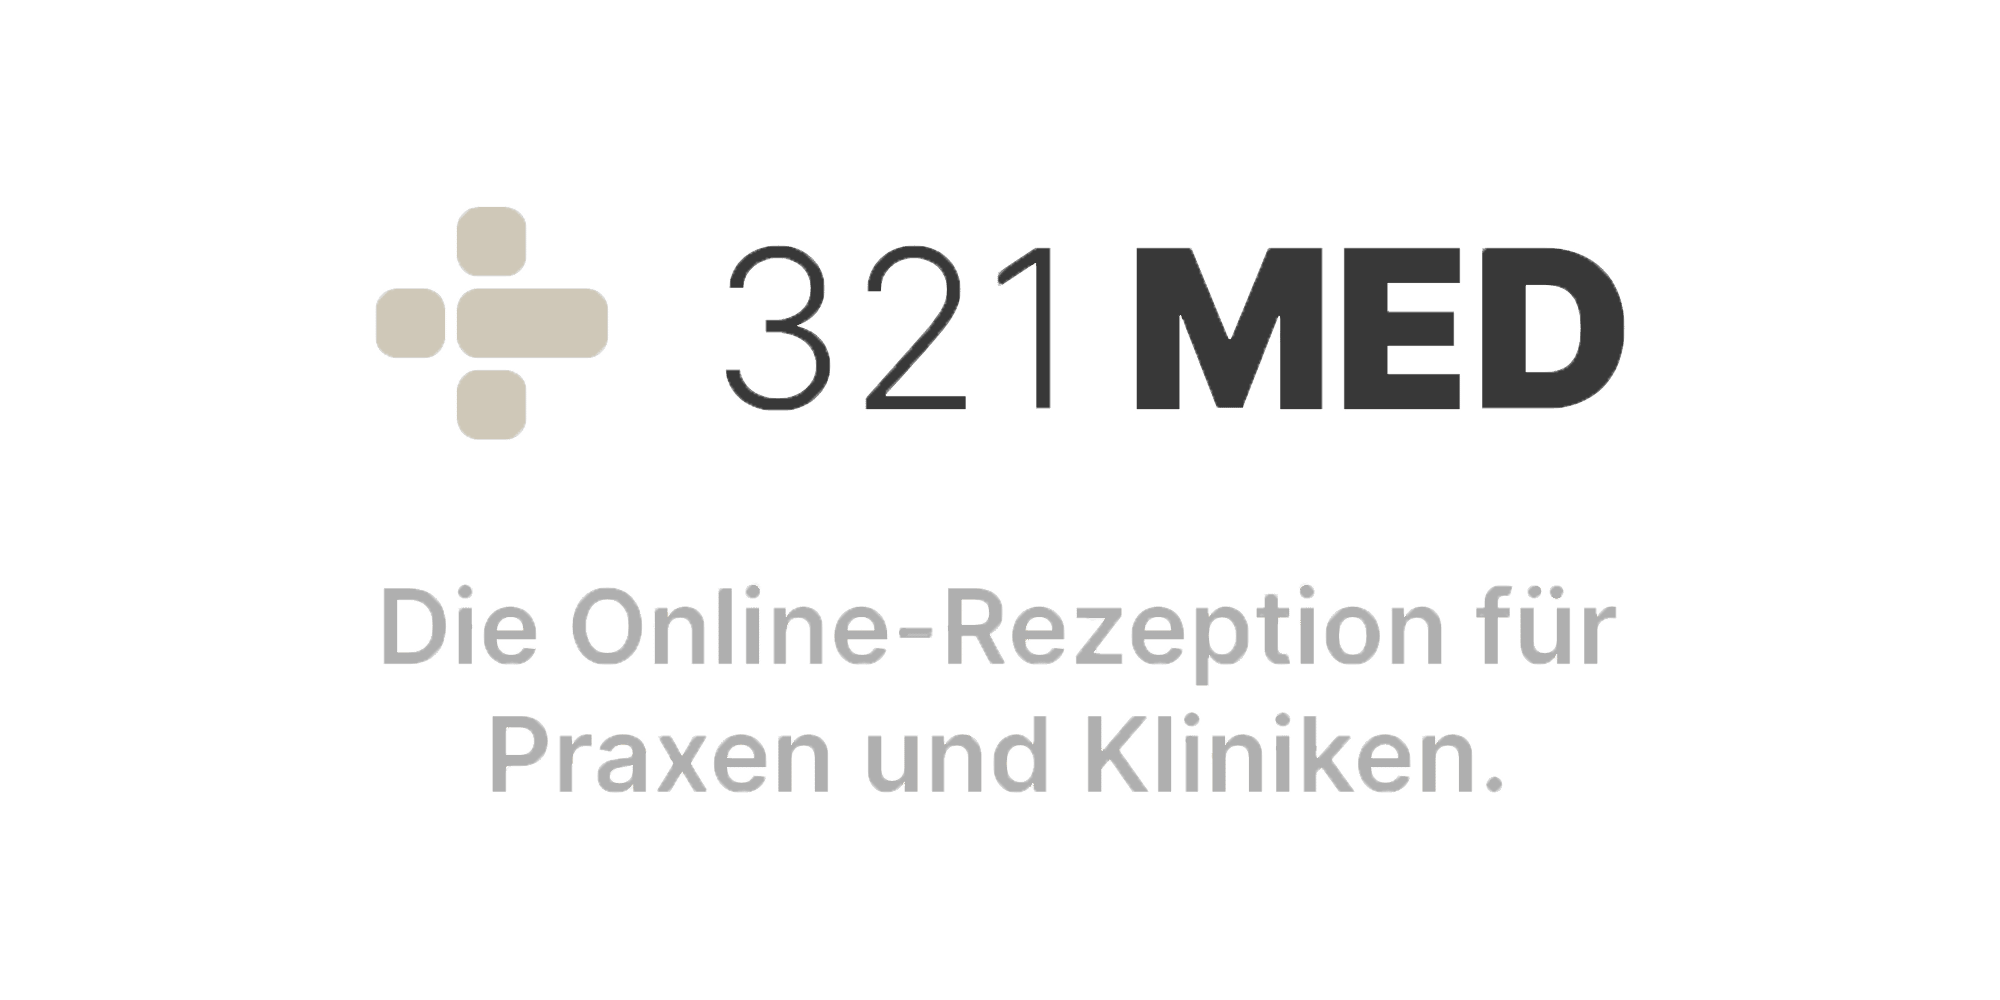 Digitale Online-Rezeption